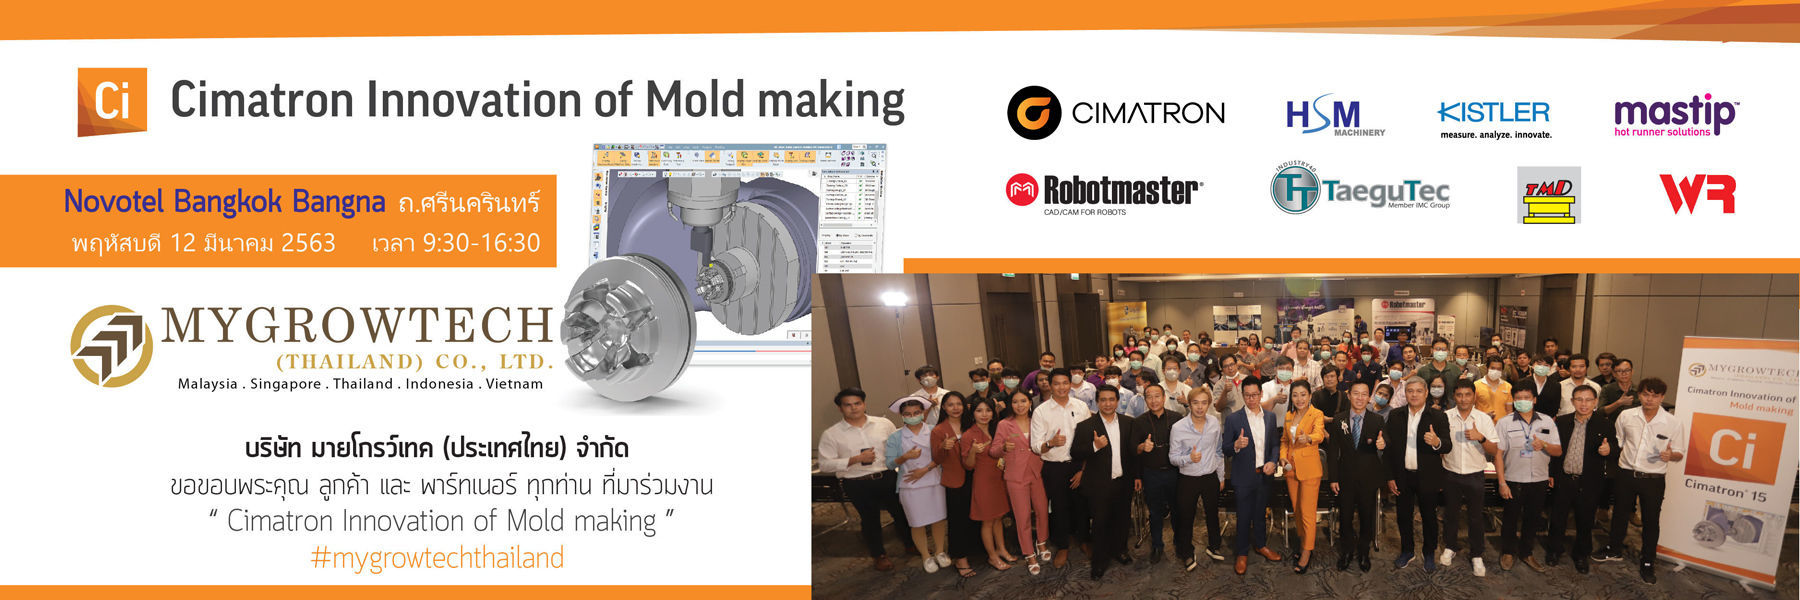 Mygrowtechthailand Cimatron Innovation of Mold Making